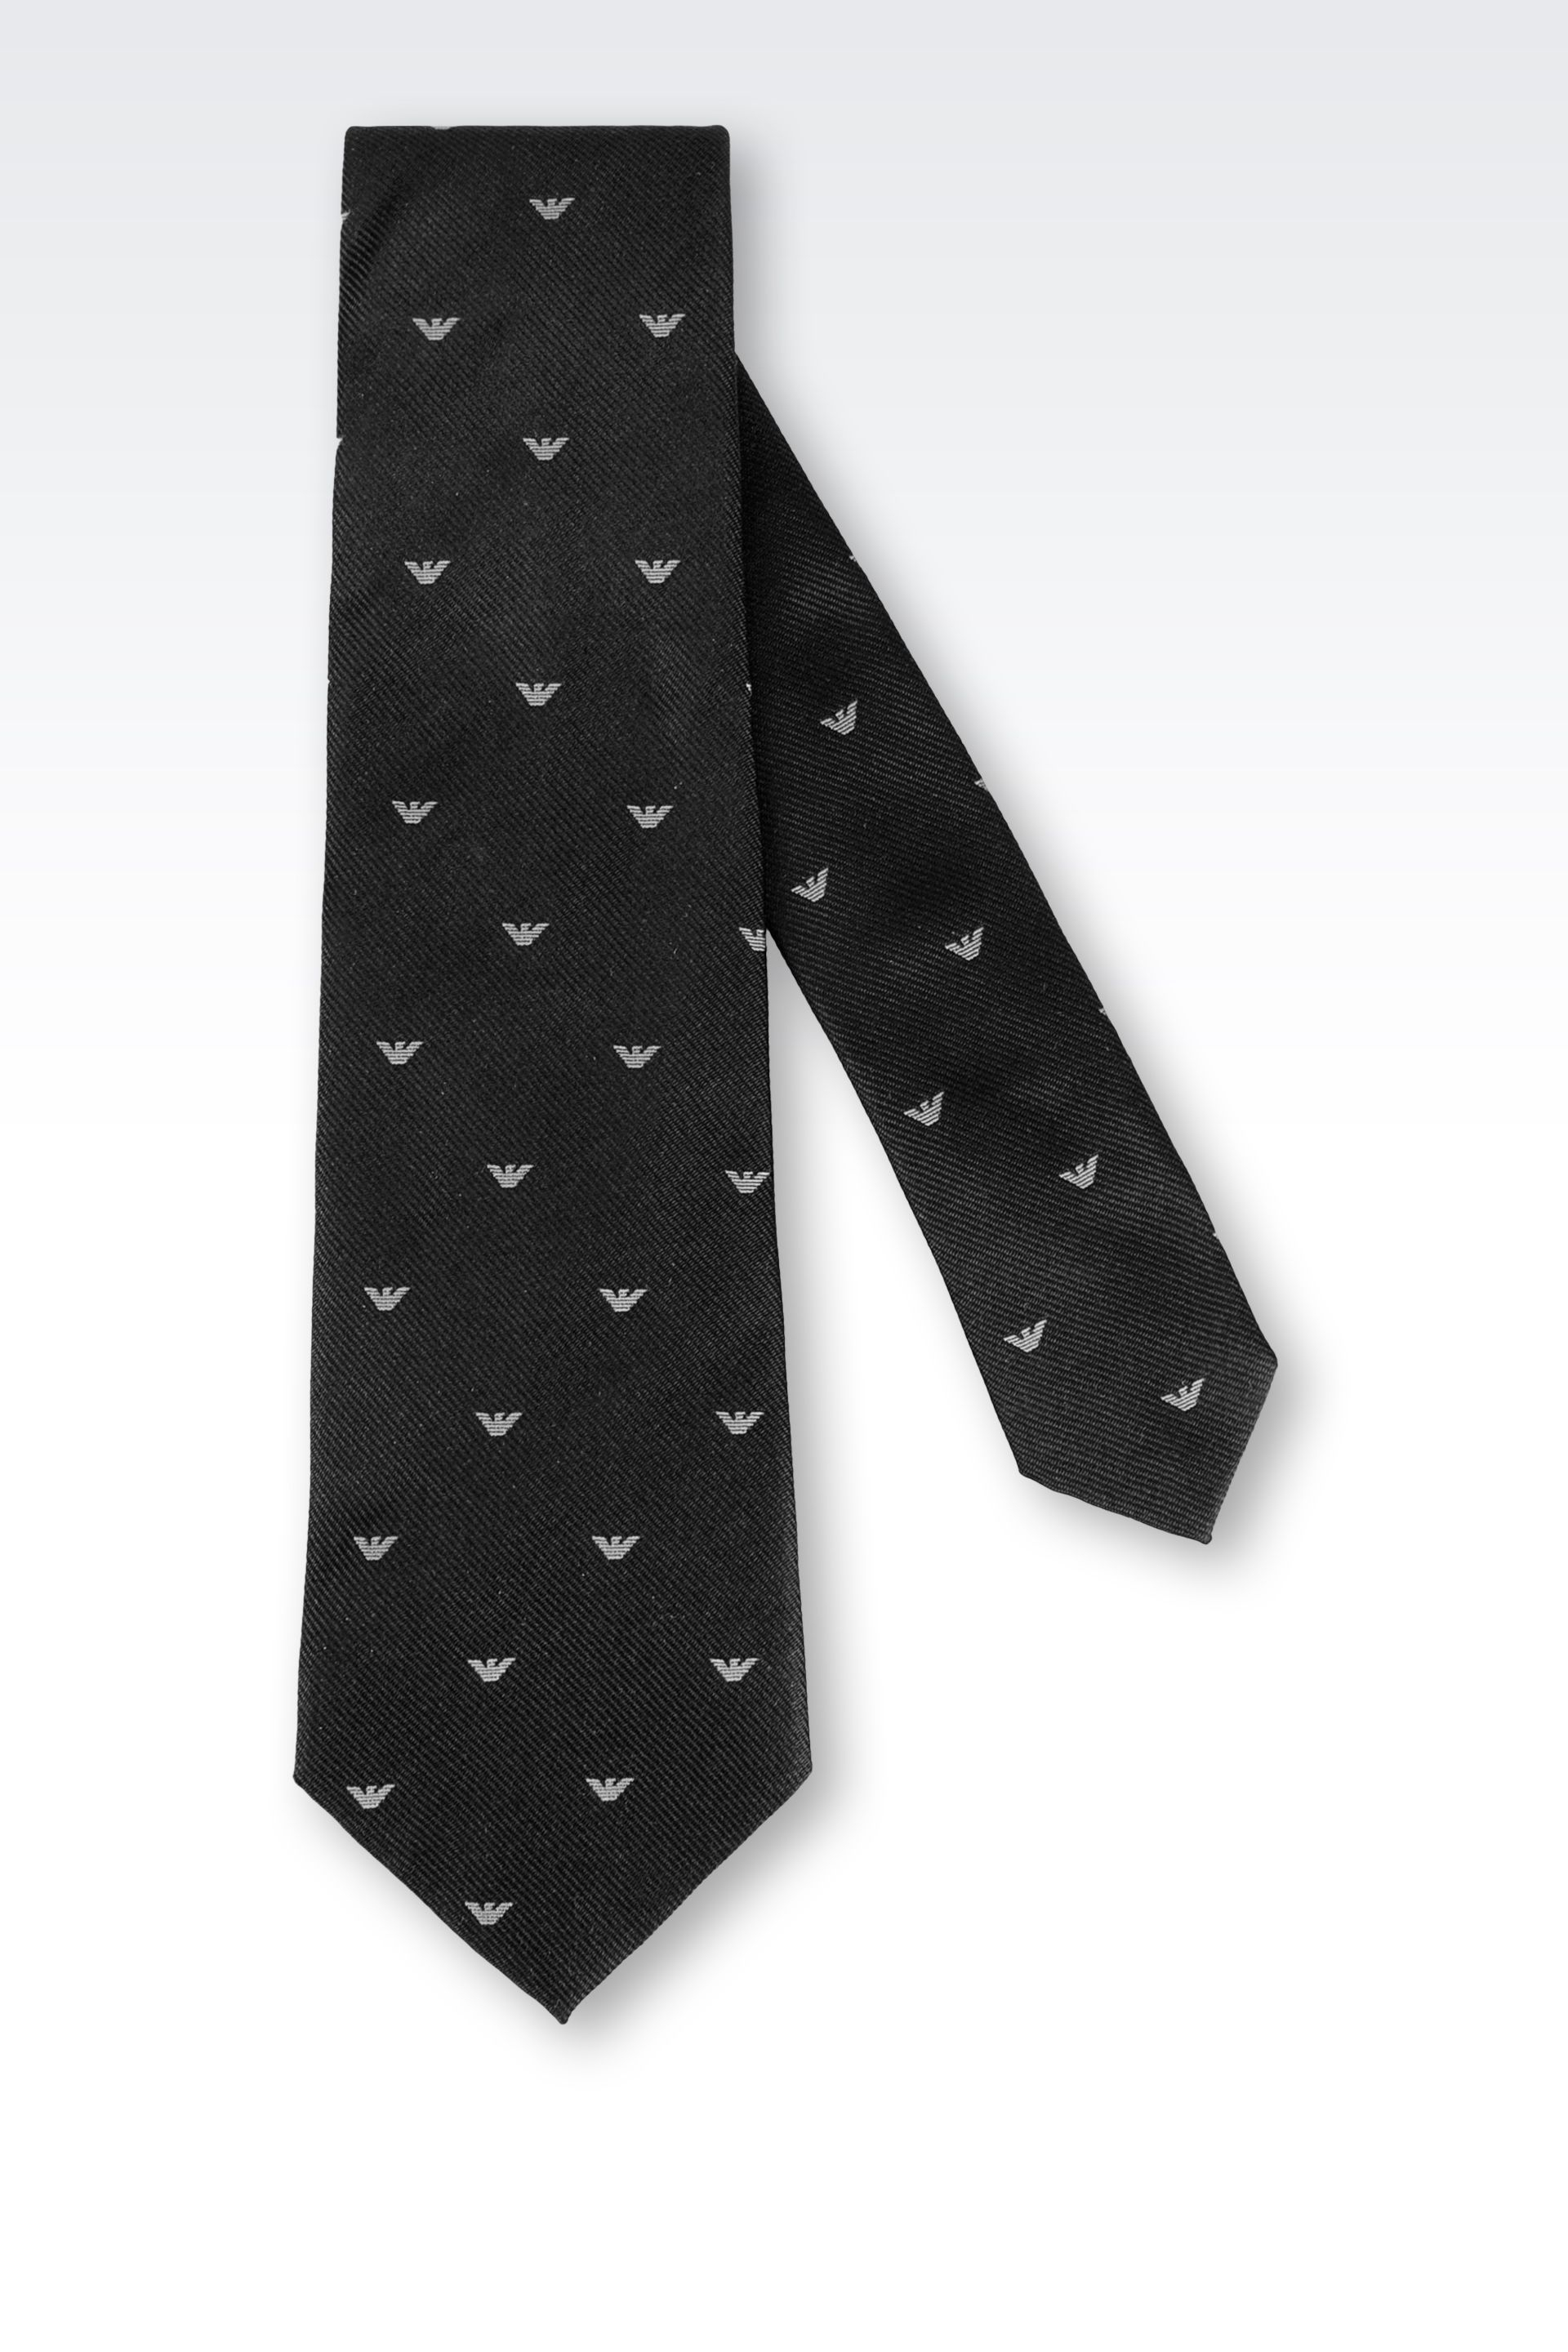 Emporio armani Tie in Logo Patterned Silk in Black for Men | Lyst